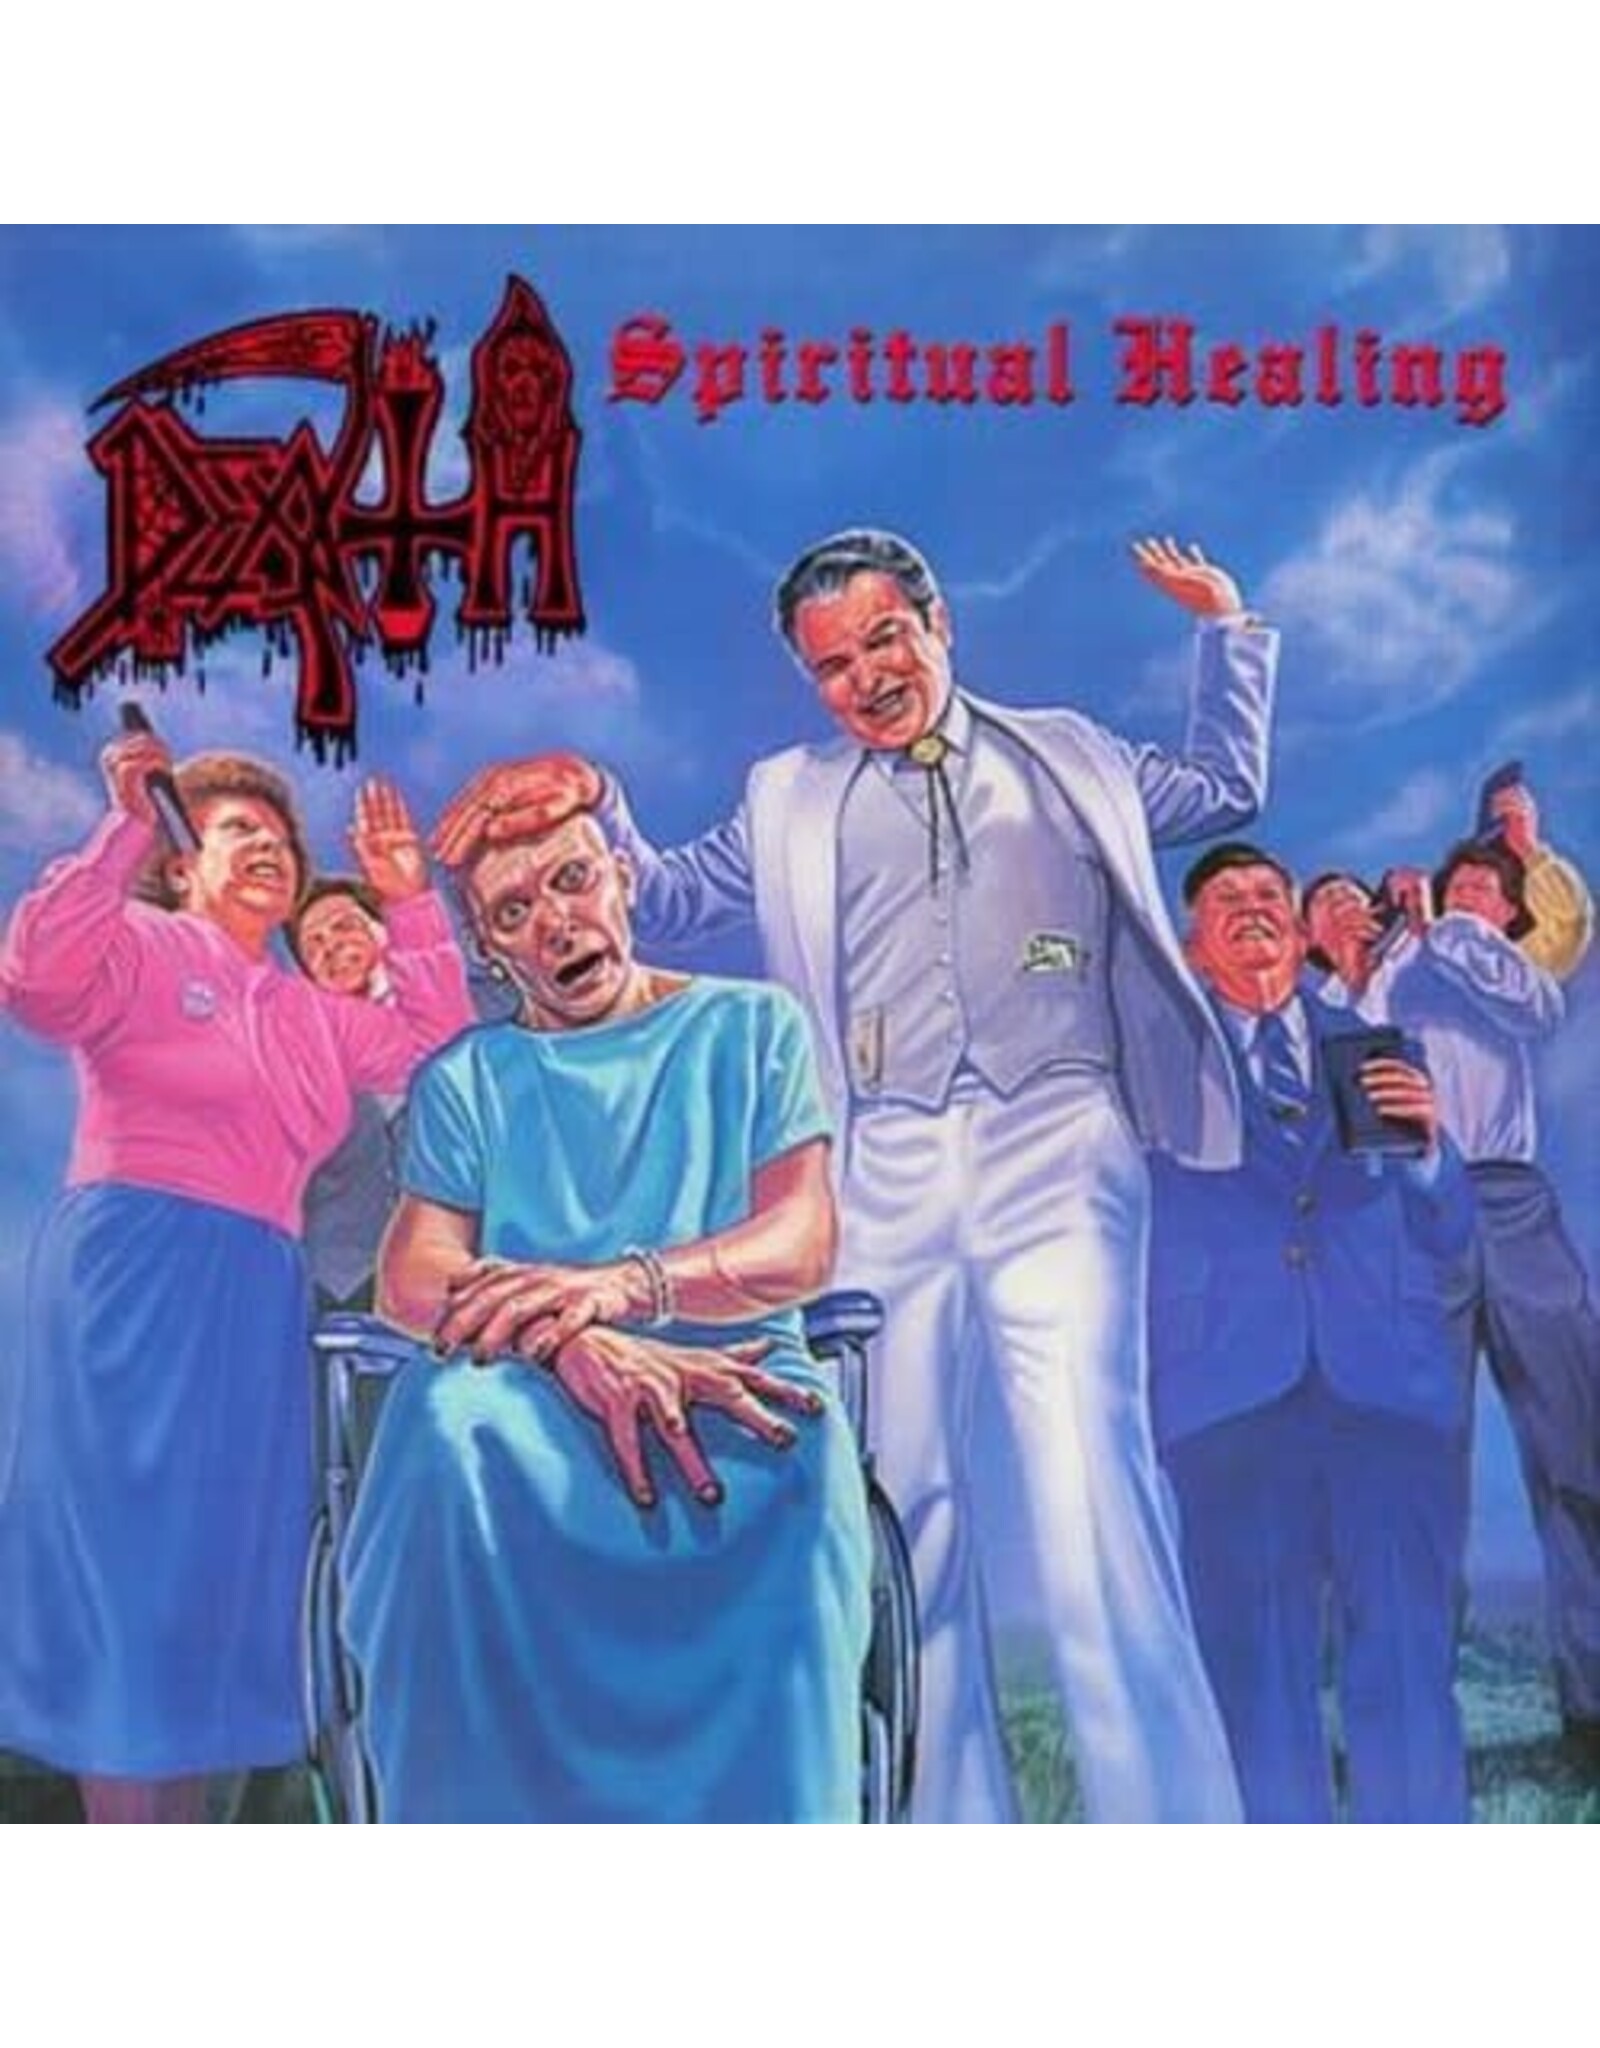 Death / Spiritual Healing (custom tricolor vinyl)